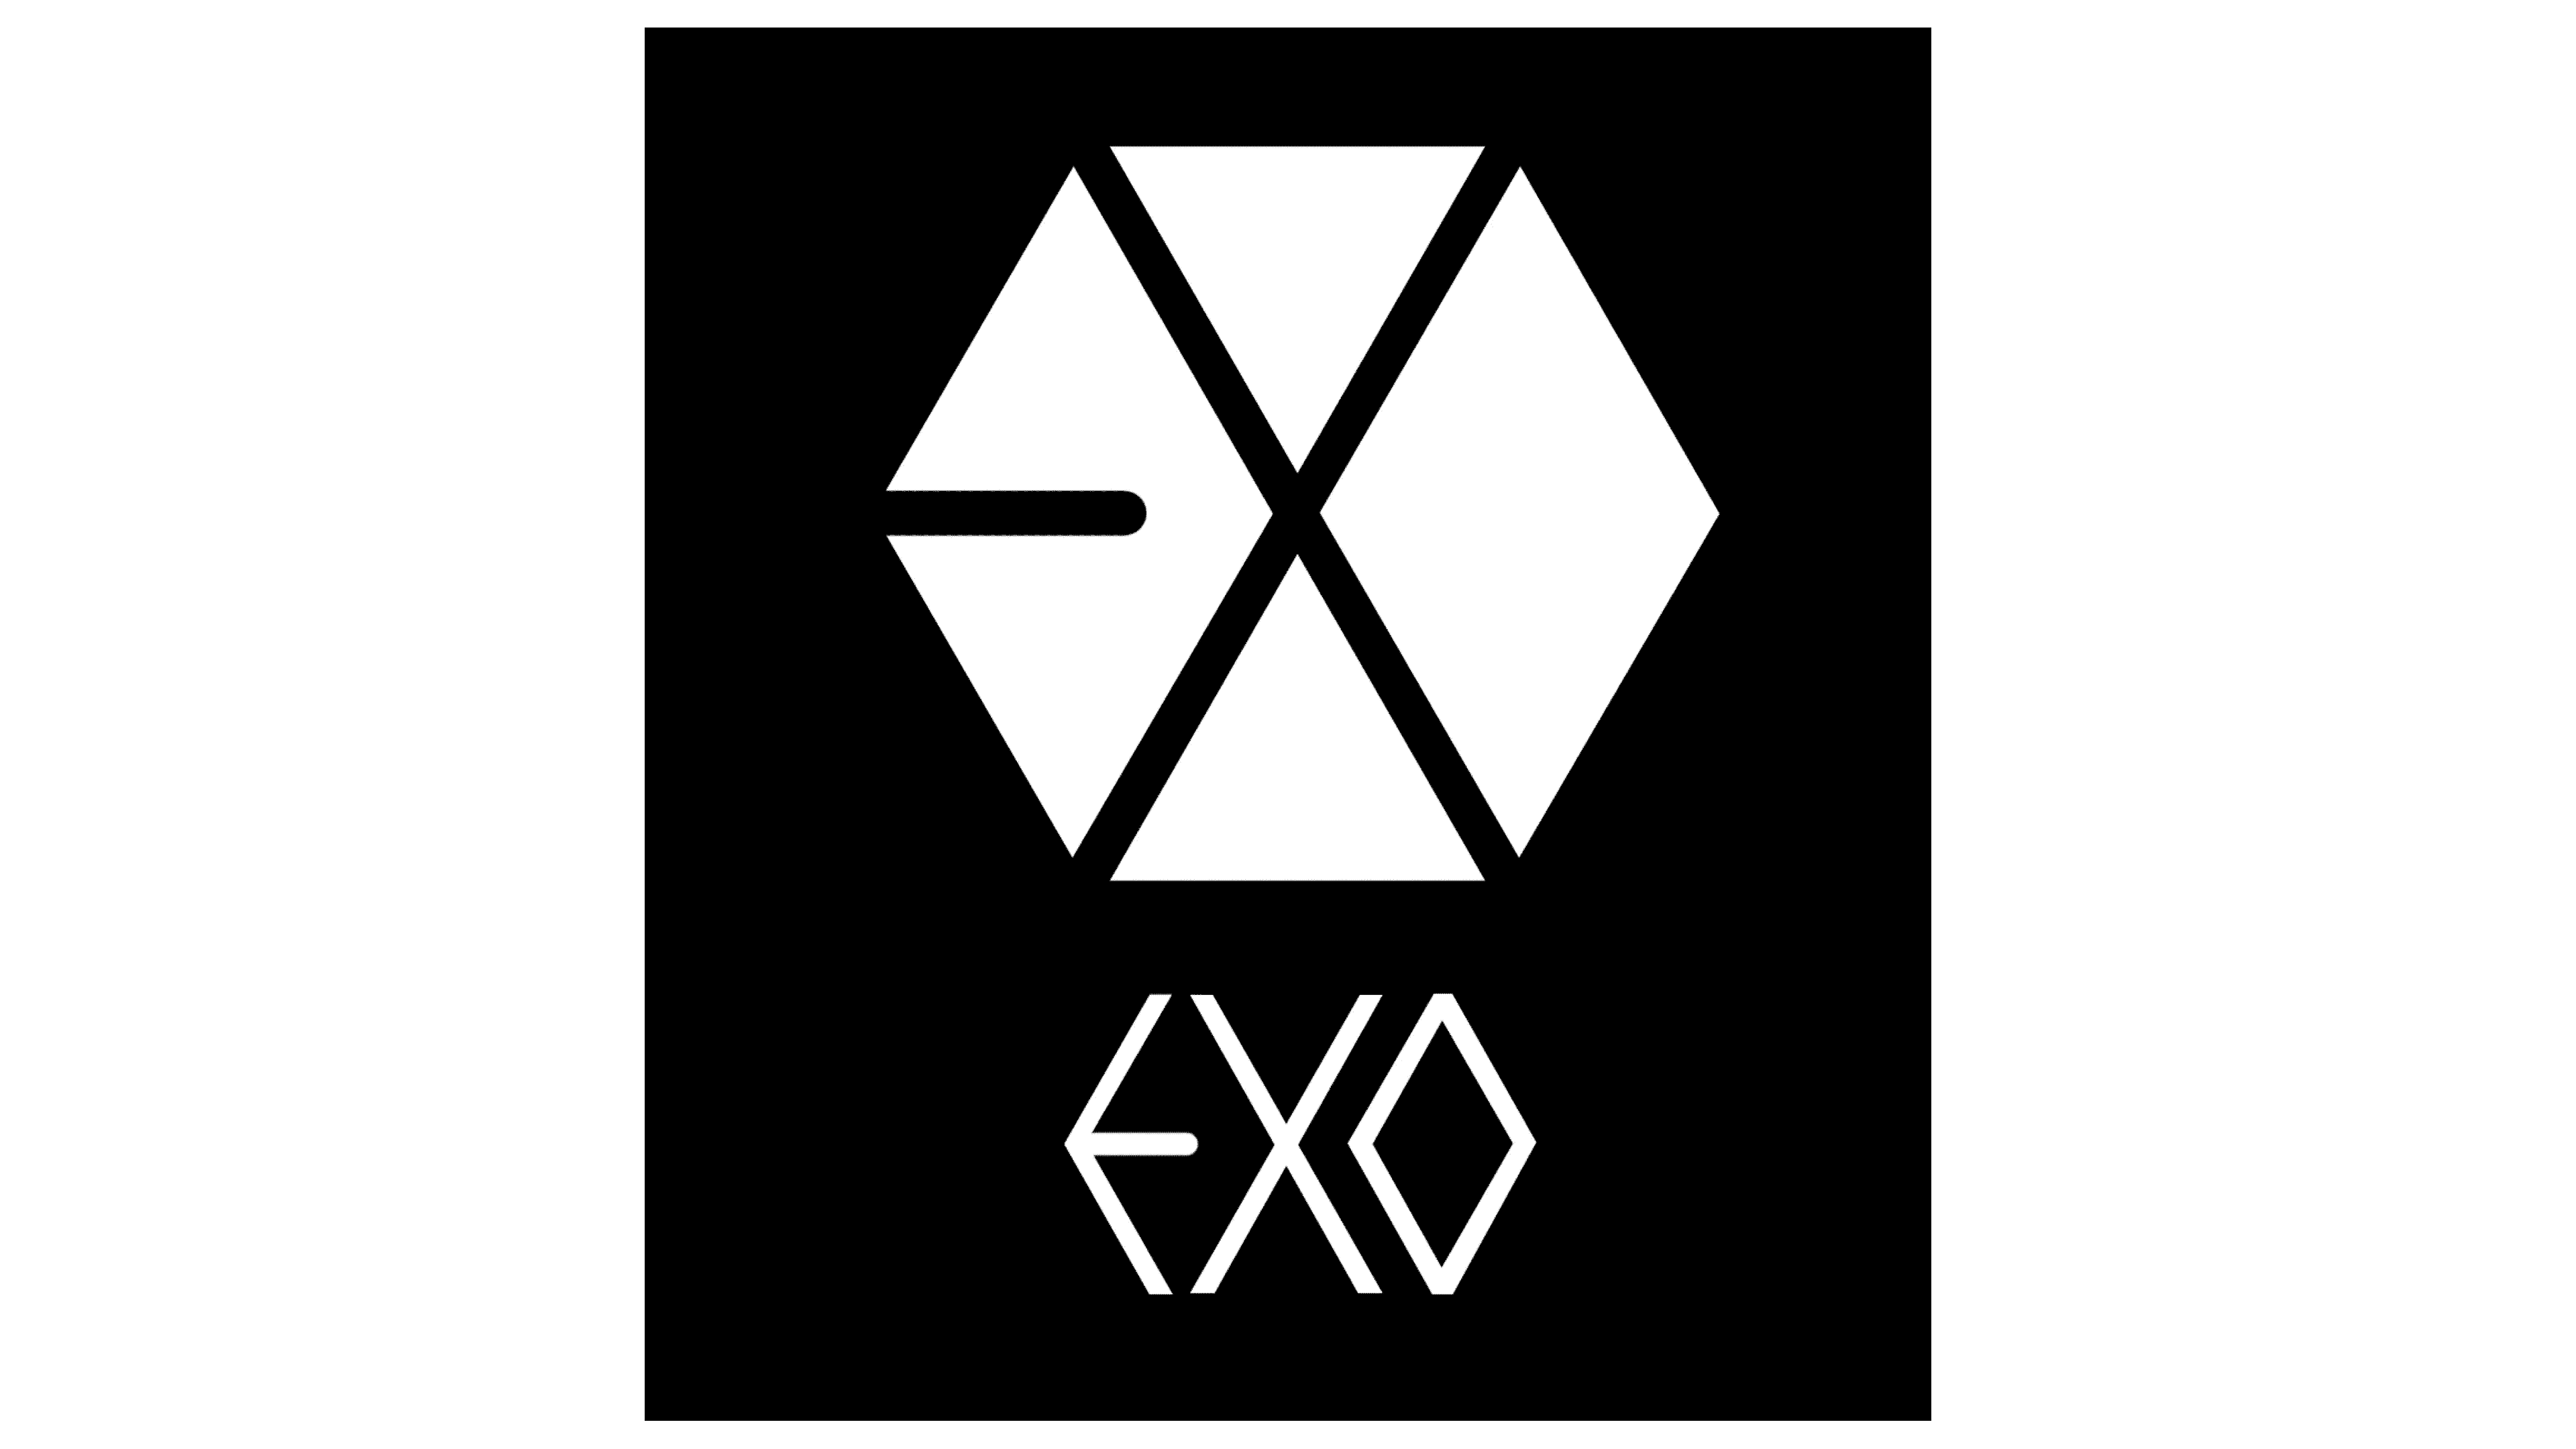 exo每个成员的标志图片_exo每个成员的标志图片下载